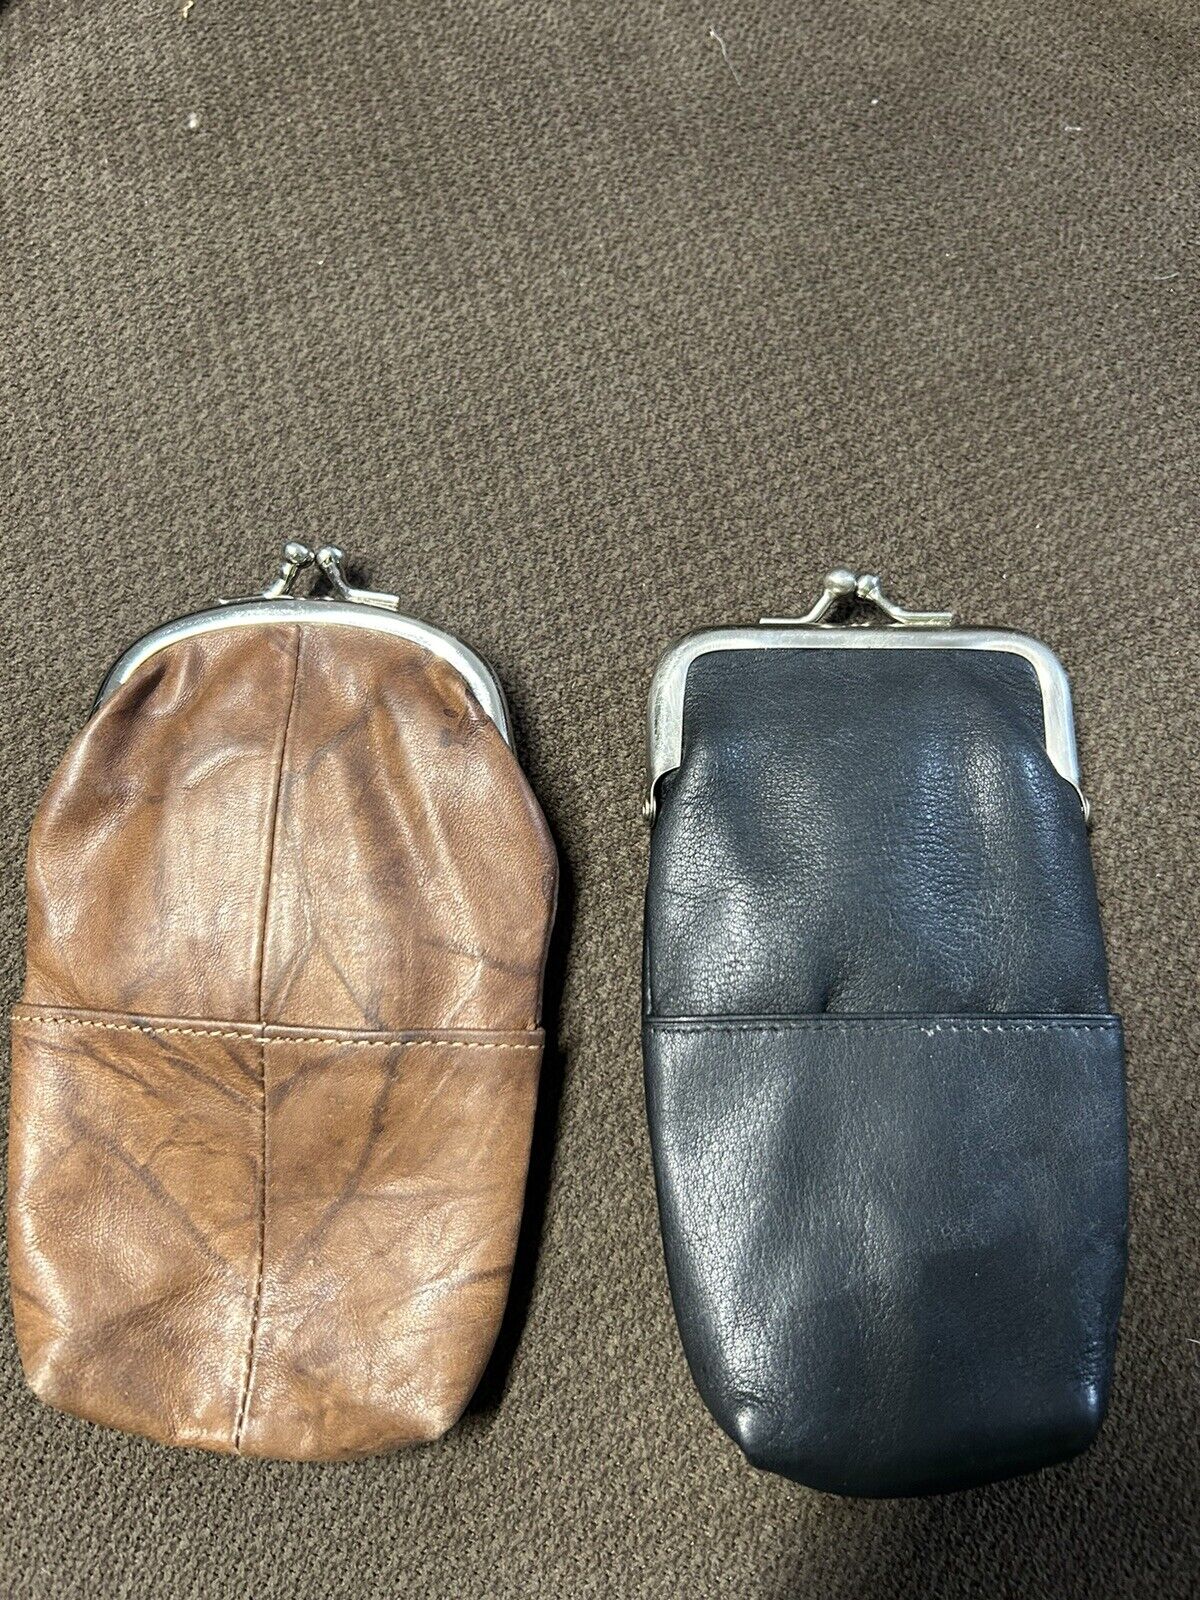 Used leather cigarette case LOT Estate